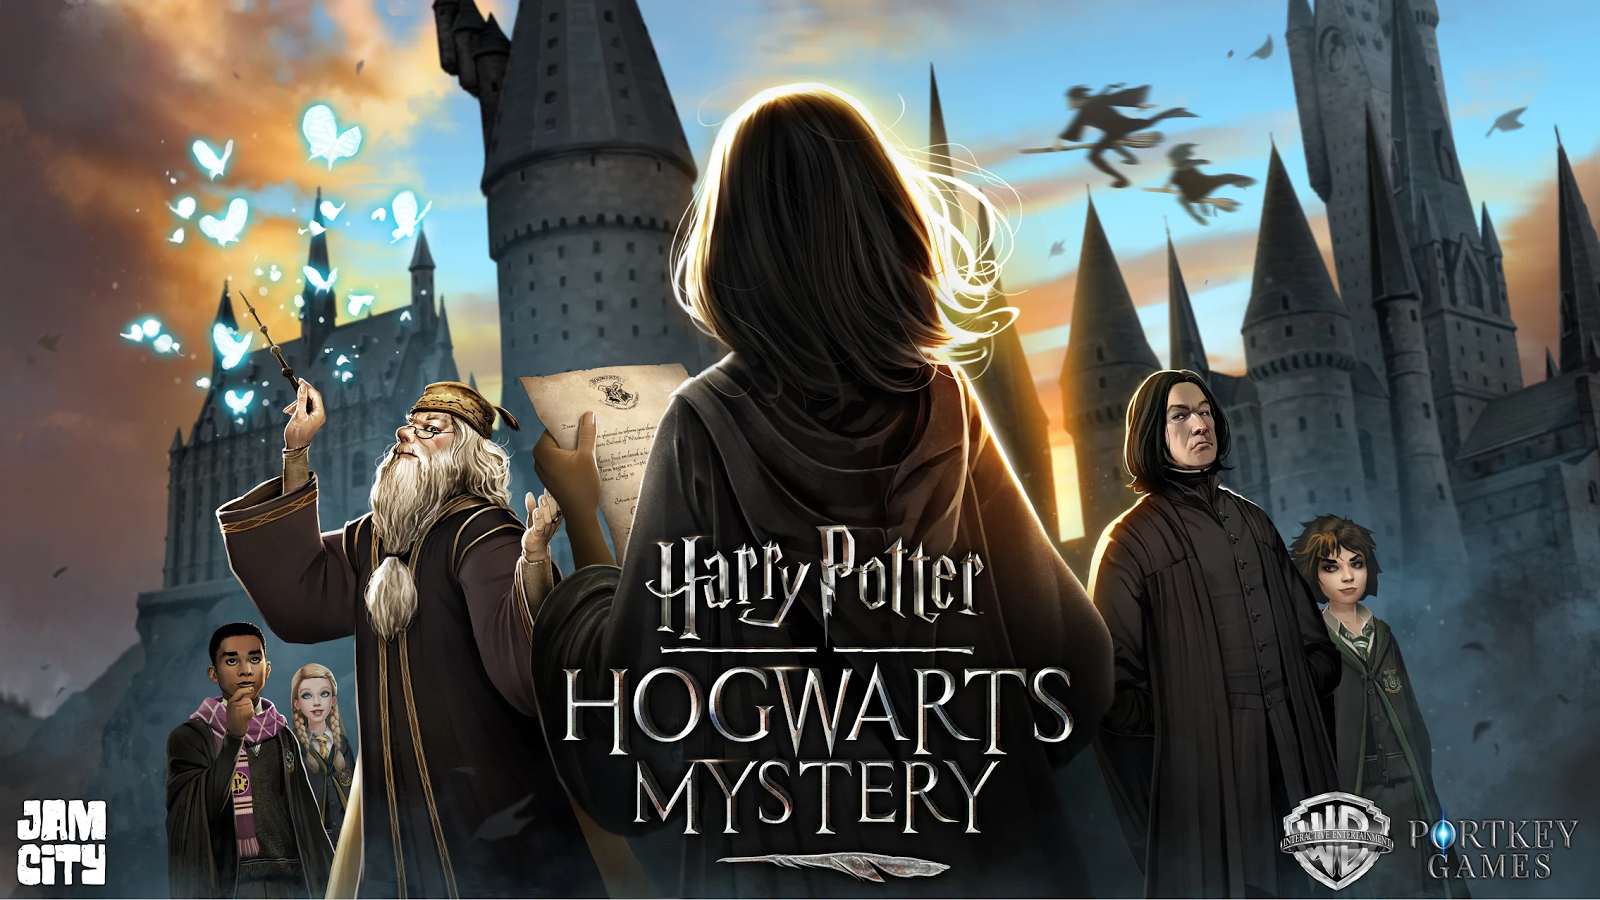 New 'Harry Potter: Hogwarts Mystery' Trailer Released, Reveals More Wizarding Tricks